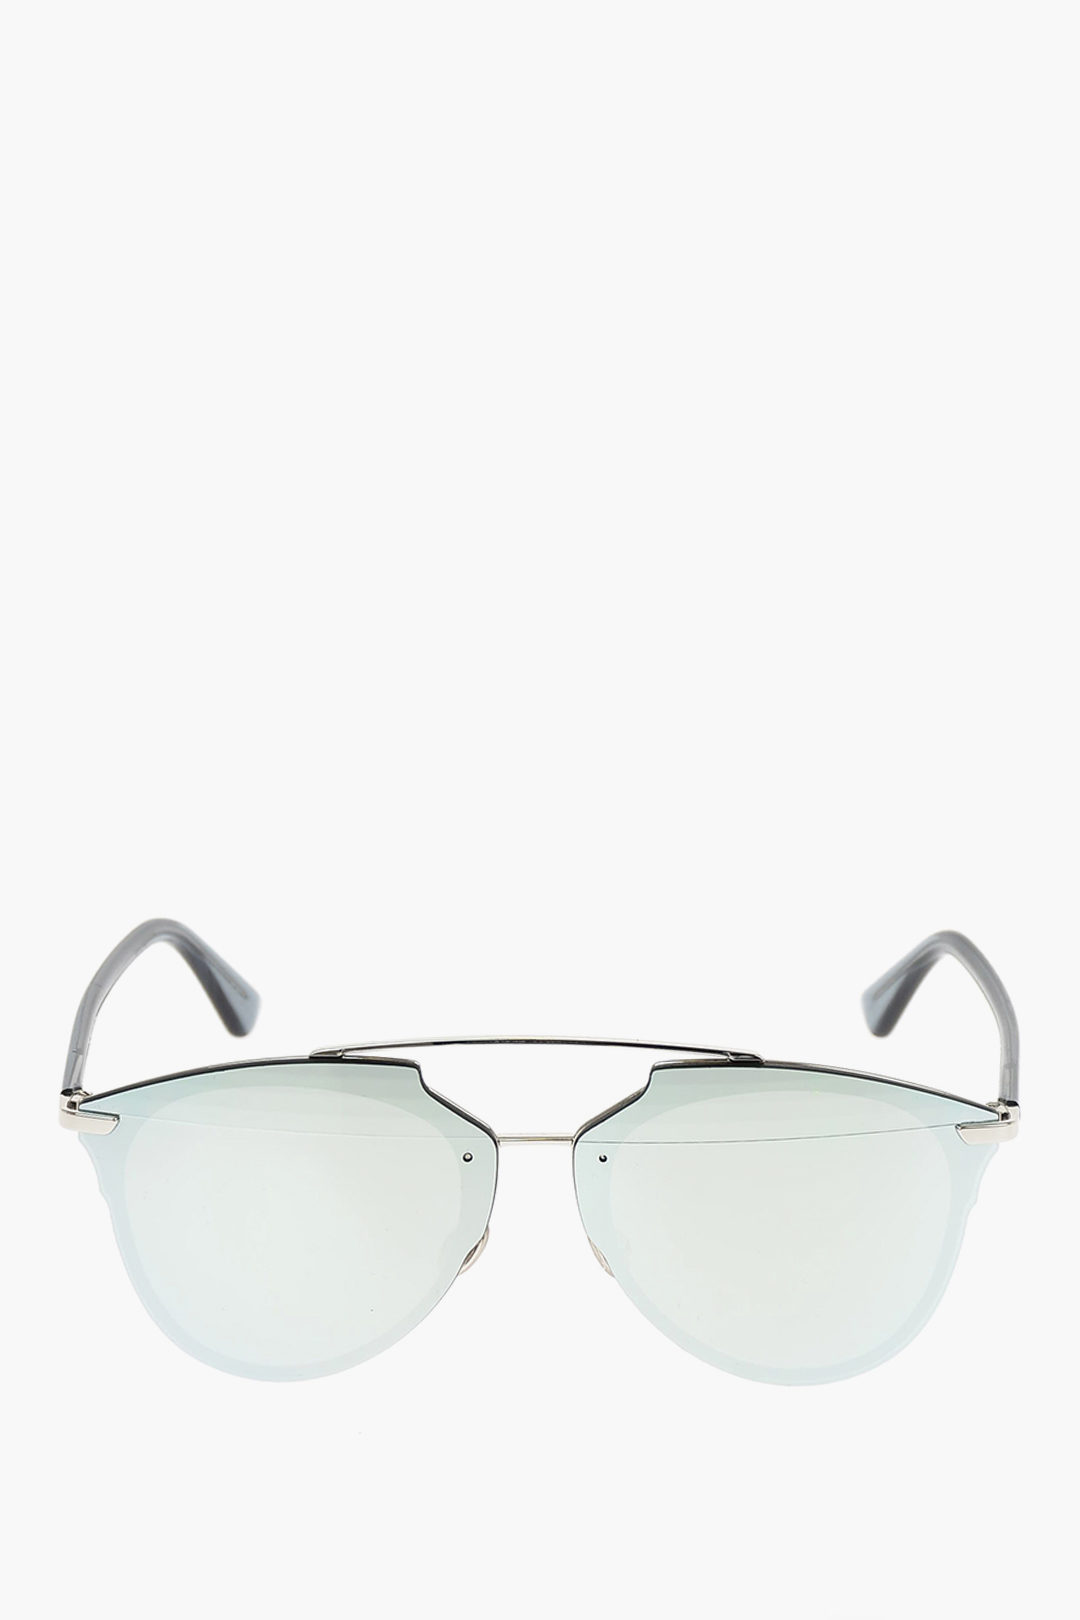 Christian Dior Mirrored Sunglasses  The Dresser London